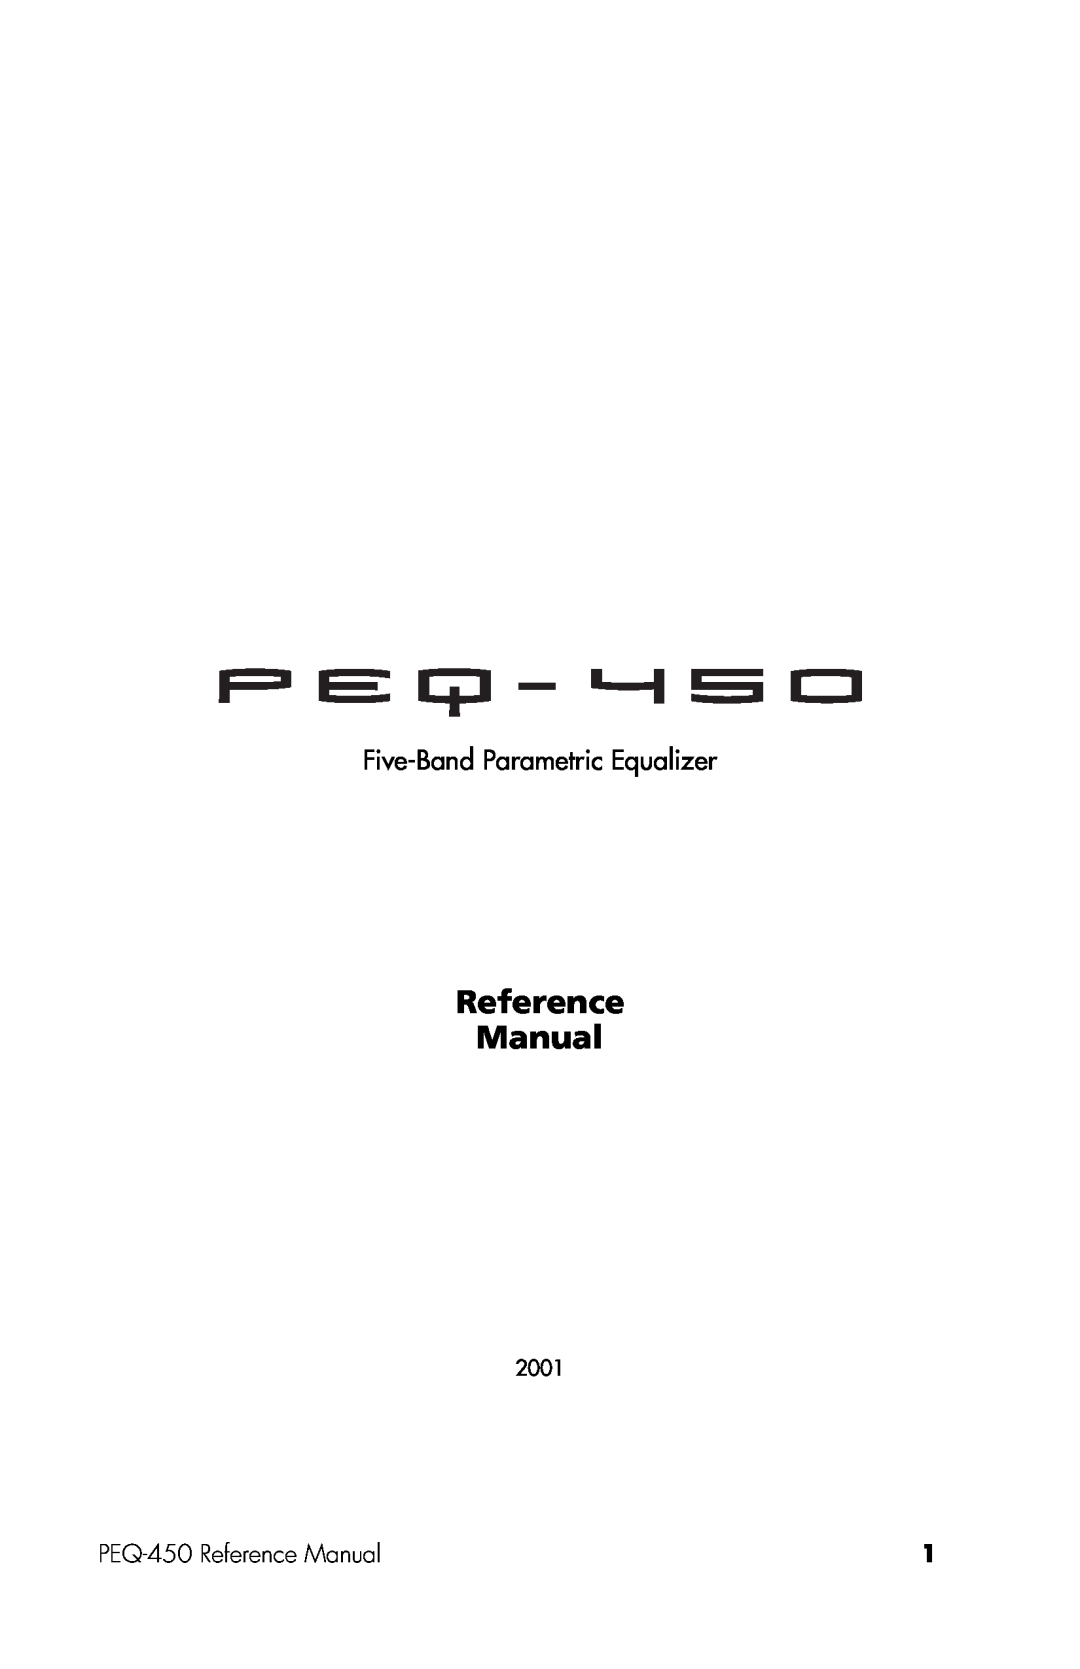 Alesis manual Five-BandParametric Equalizer, PEQ-450Reference Manual, 2001 